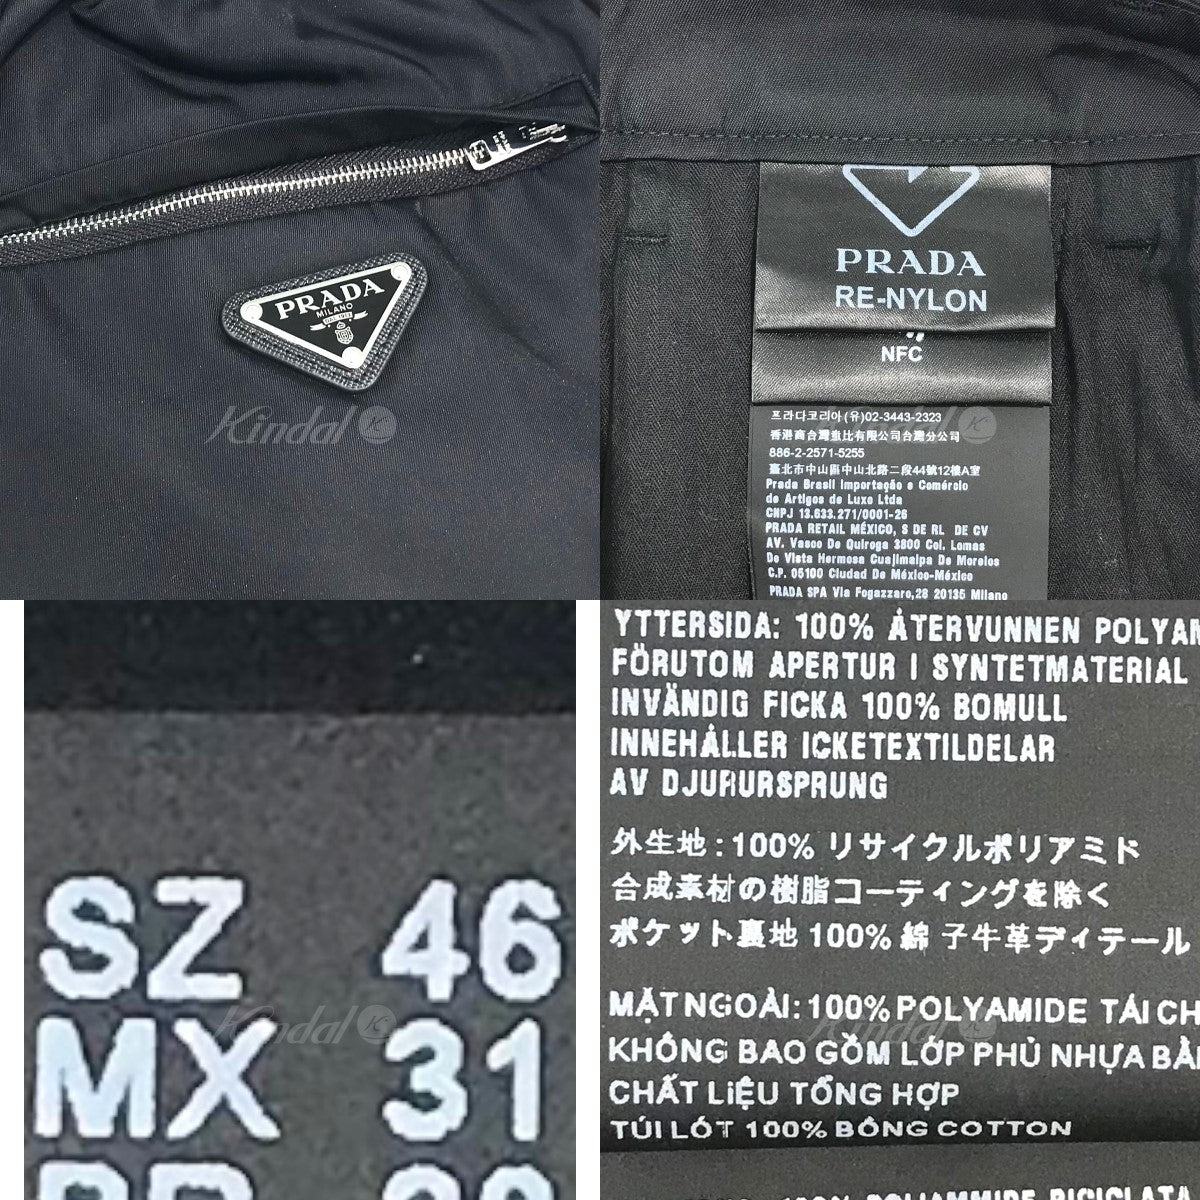 PRADA(プラダ) Re Nylon トラックパンツ SPH109 ブラック サイズ 15 